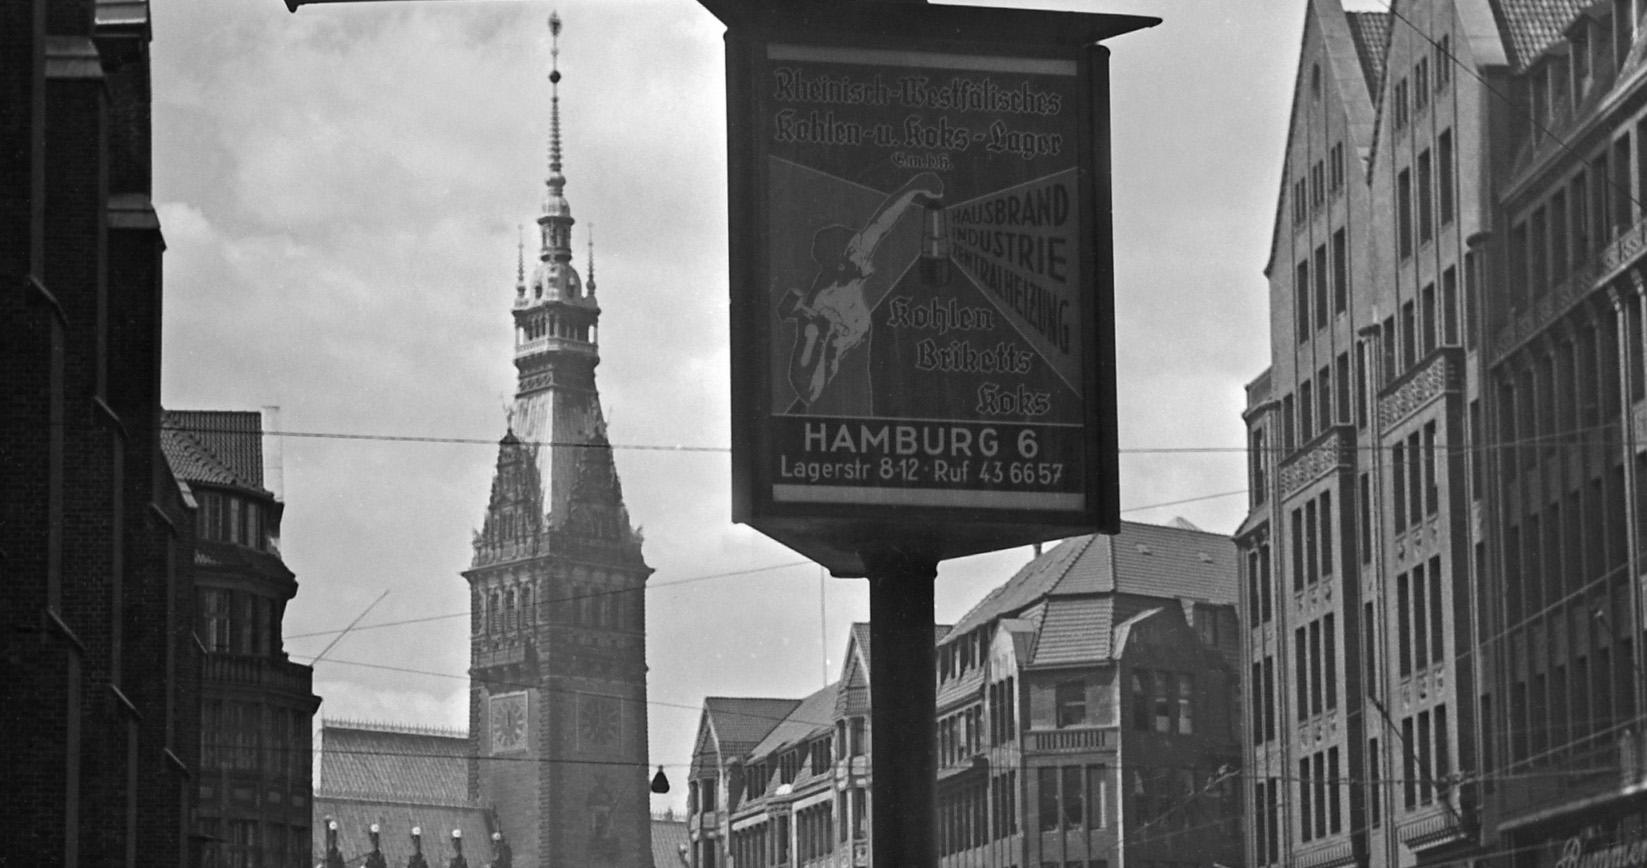 Moenckebergstrasse cars people city hall, Hamburg Germany 1938 Printed Later  - Photograph by Karl Heinrich Lämmel